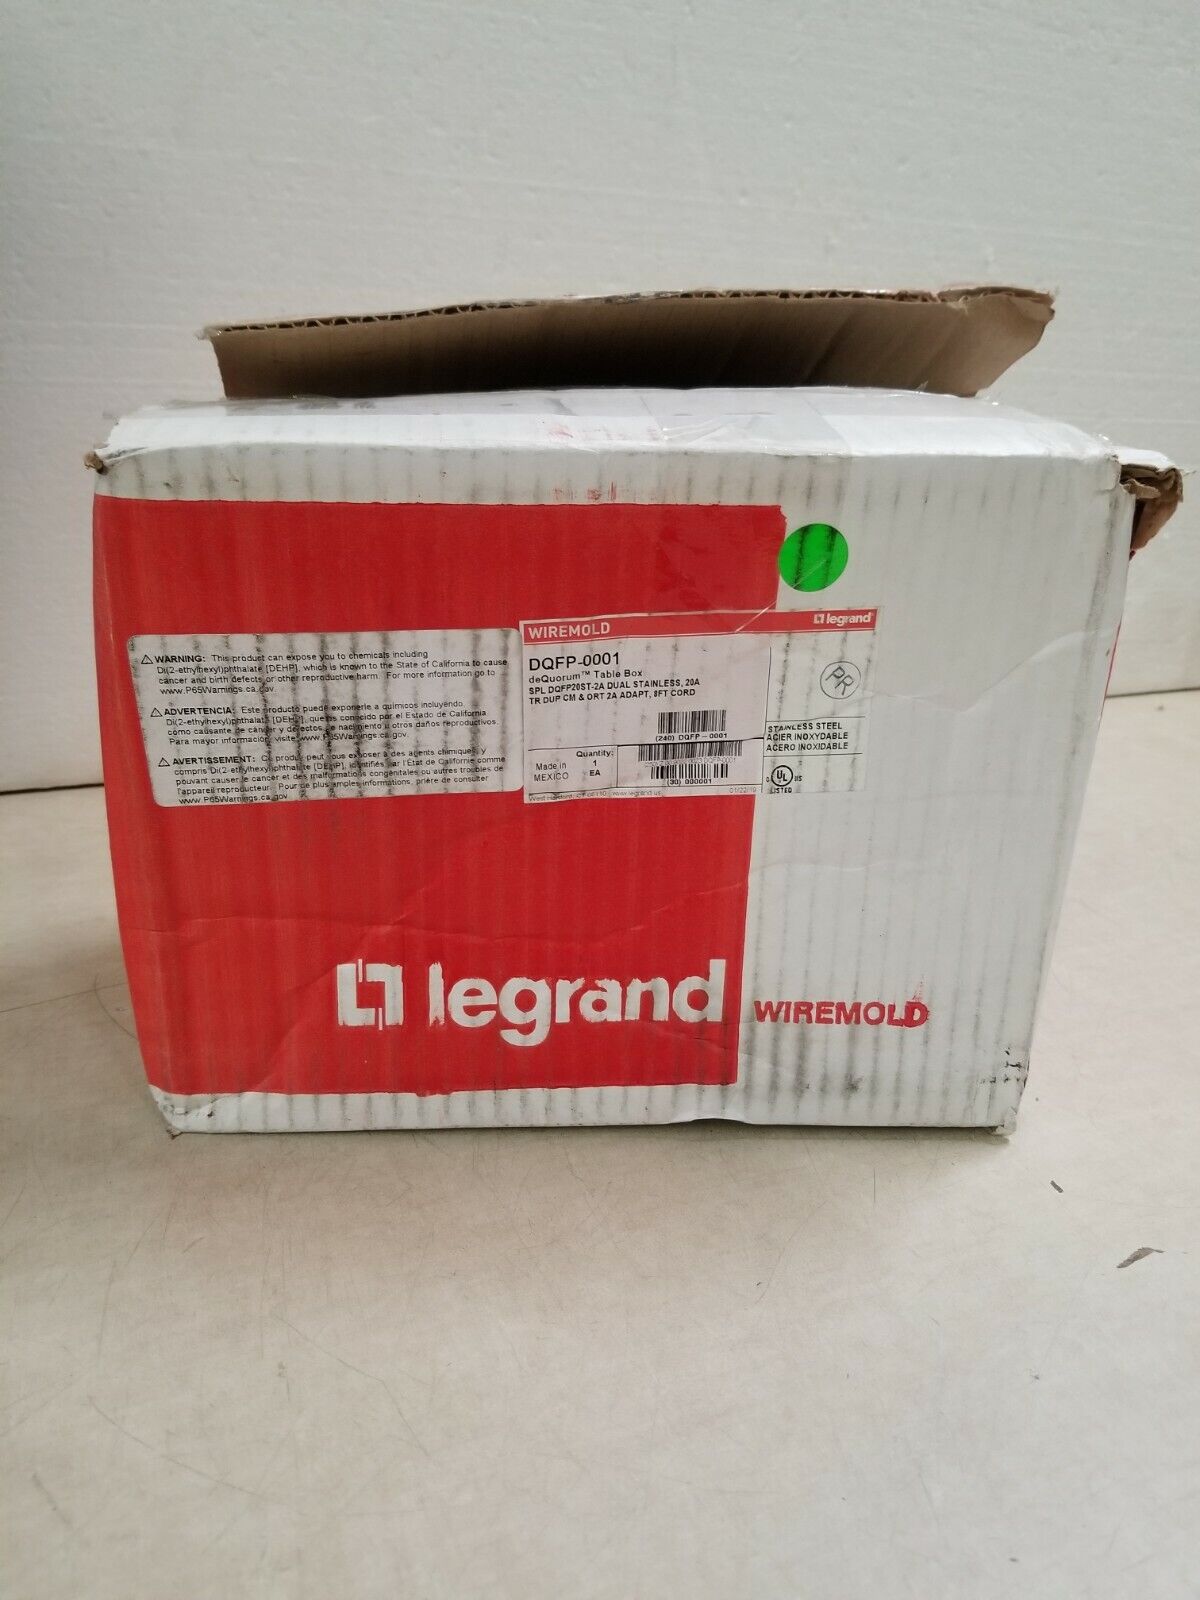 Legrand Wiremold dQuorum Table Box 20A 8Ft Cord (DQFP-0001)